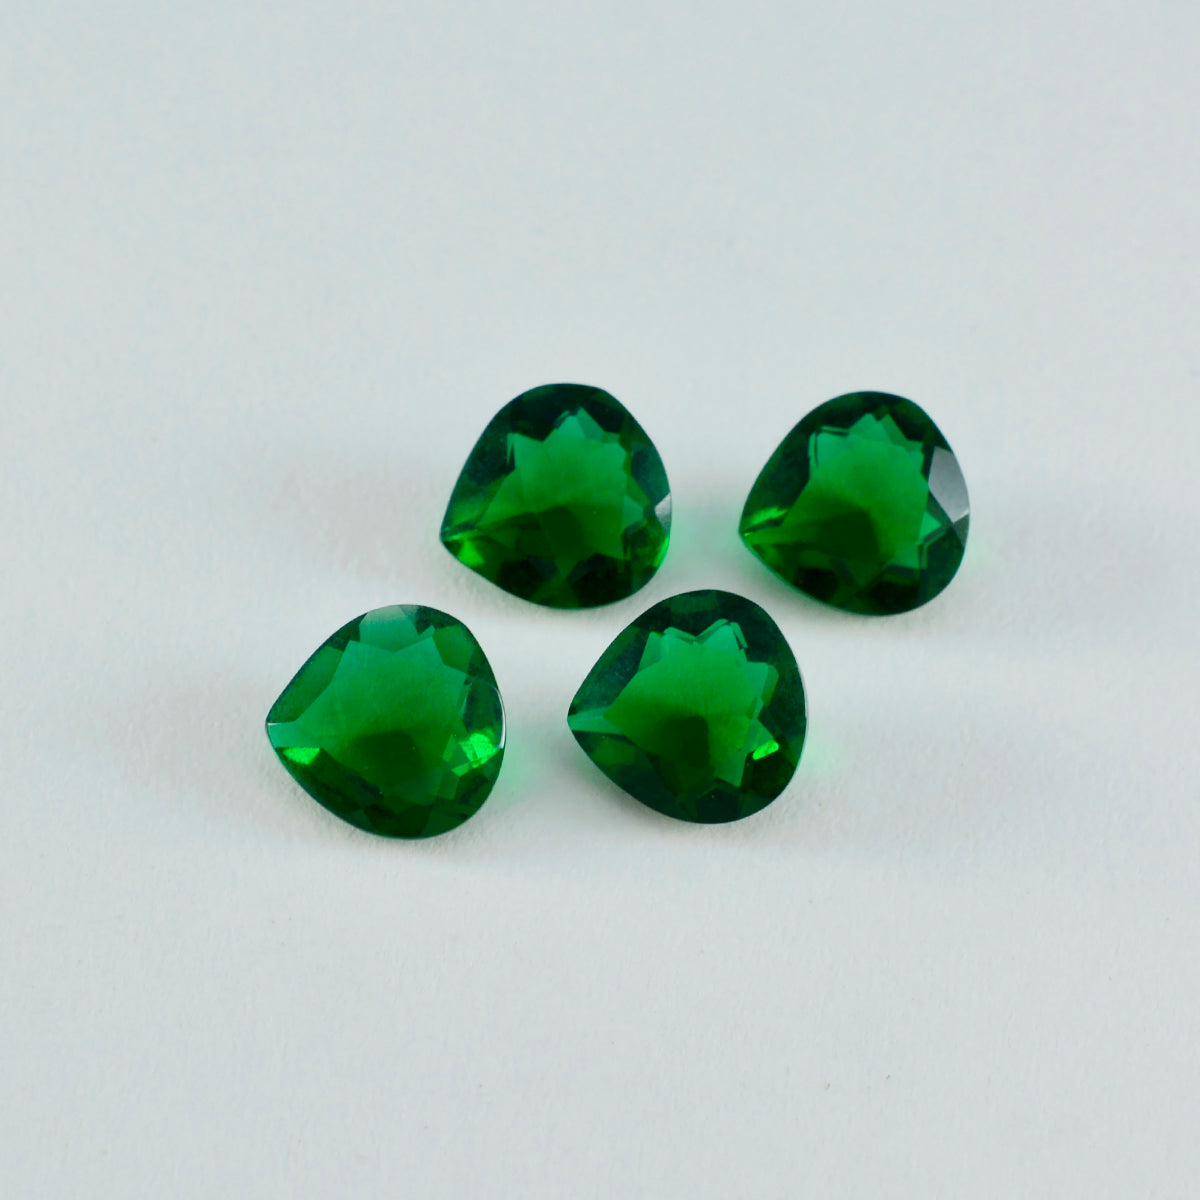 Riyogems 1PC Groene Smaragd CZ Facet 6x6 mm Hartvorm verbazingwekkende Kwaliteit Gem